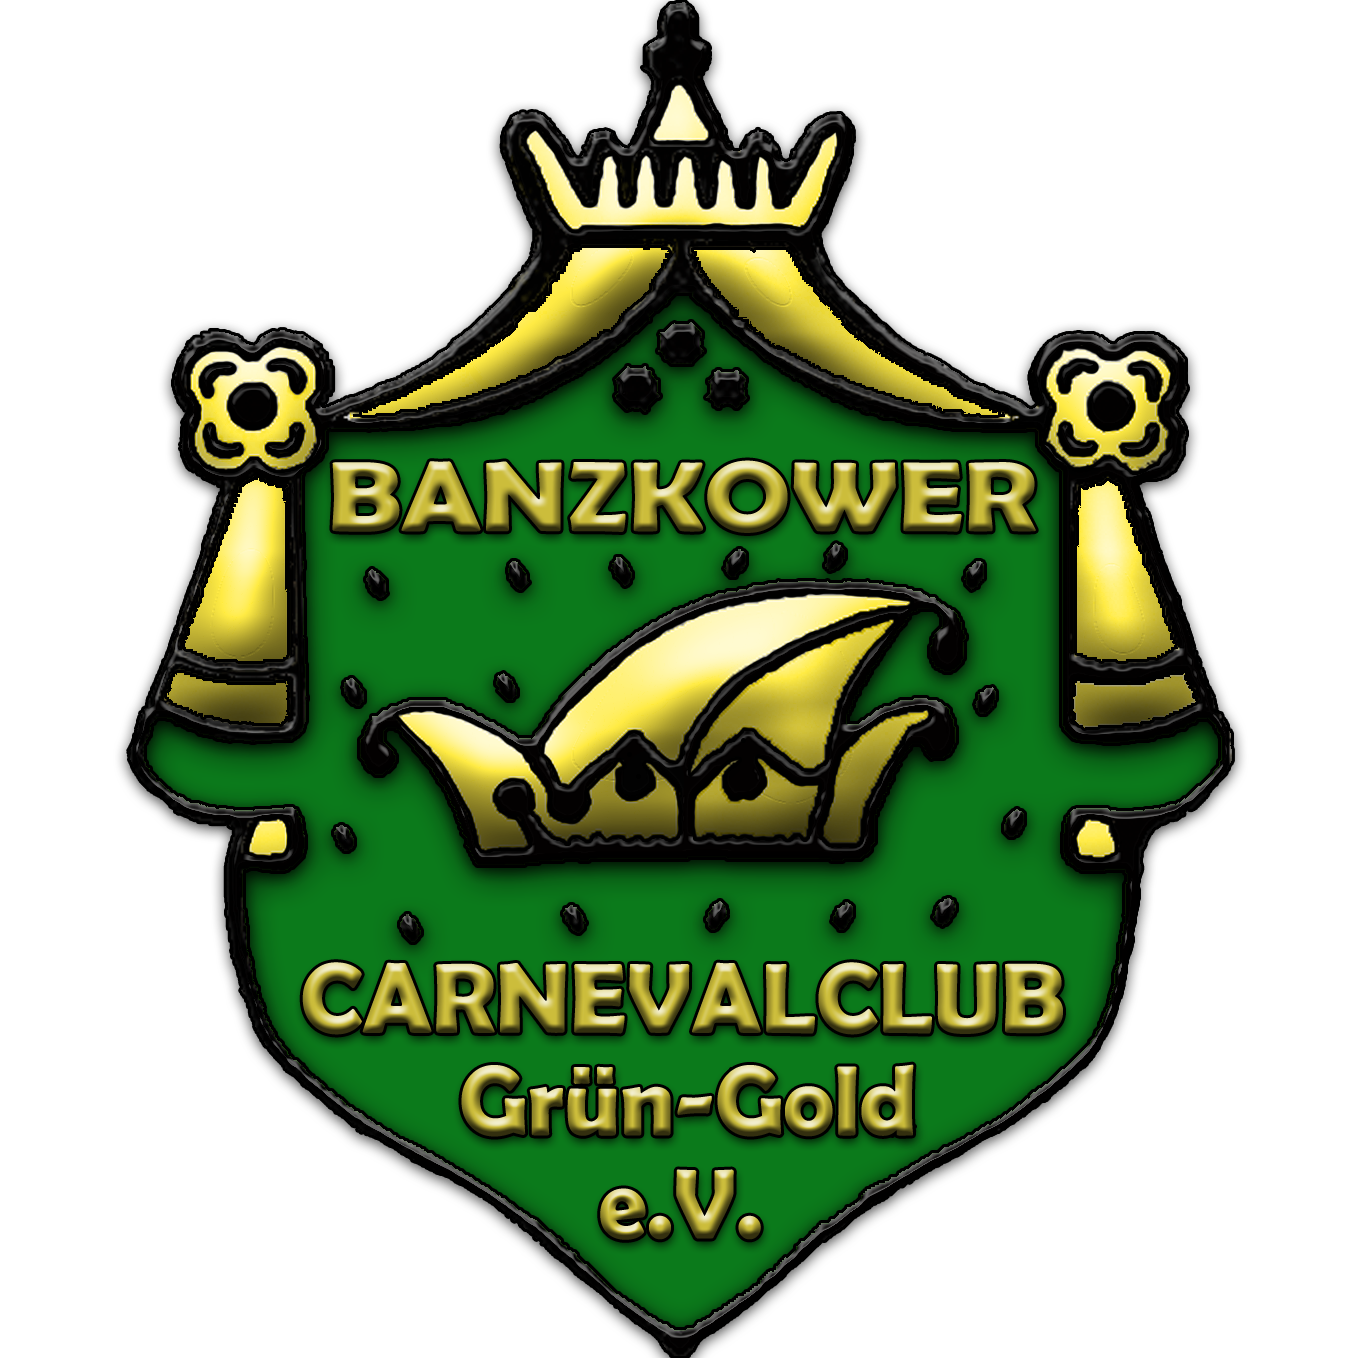 Banzkower Carneval Club